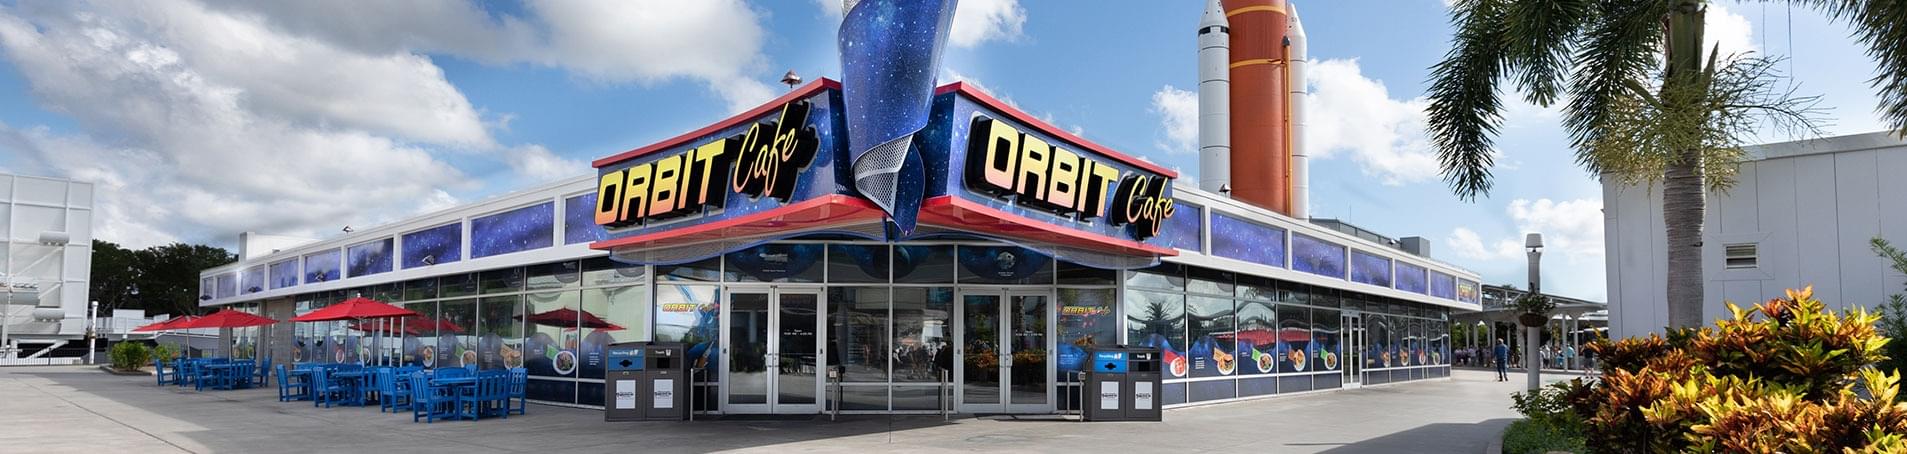 Orbit Cafe